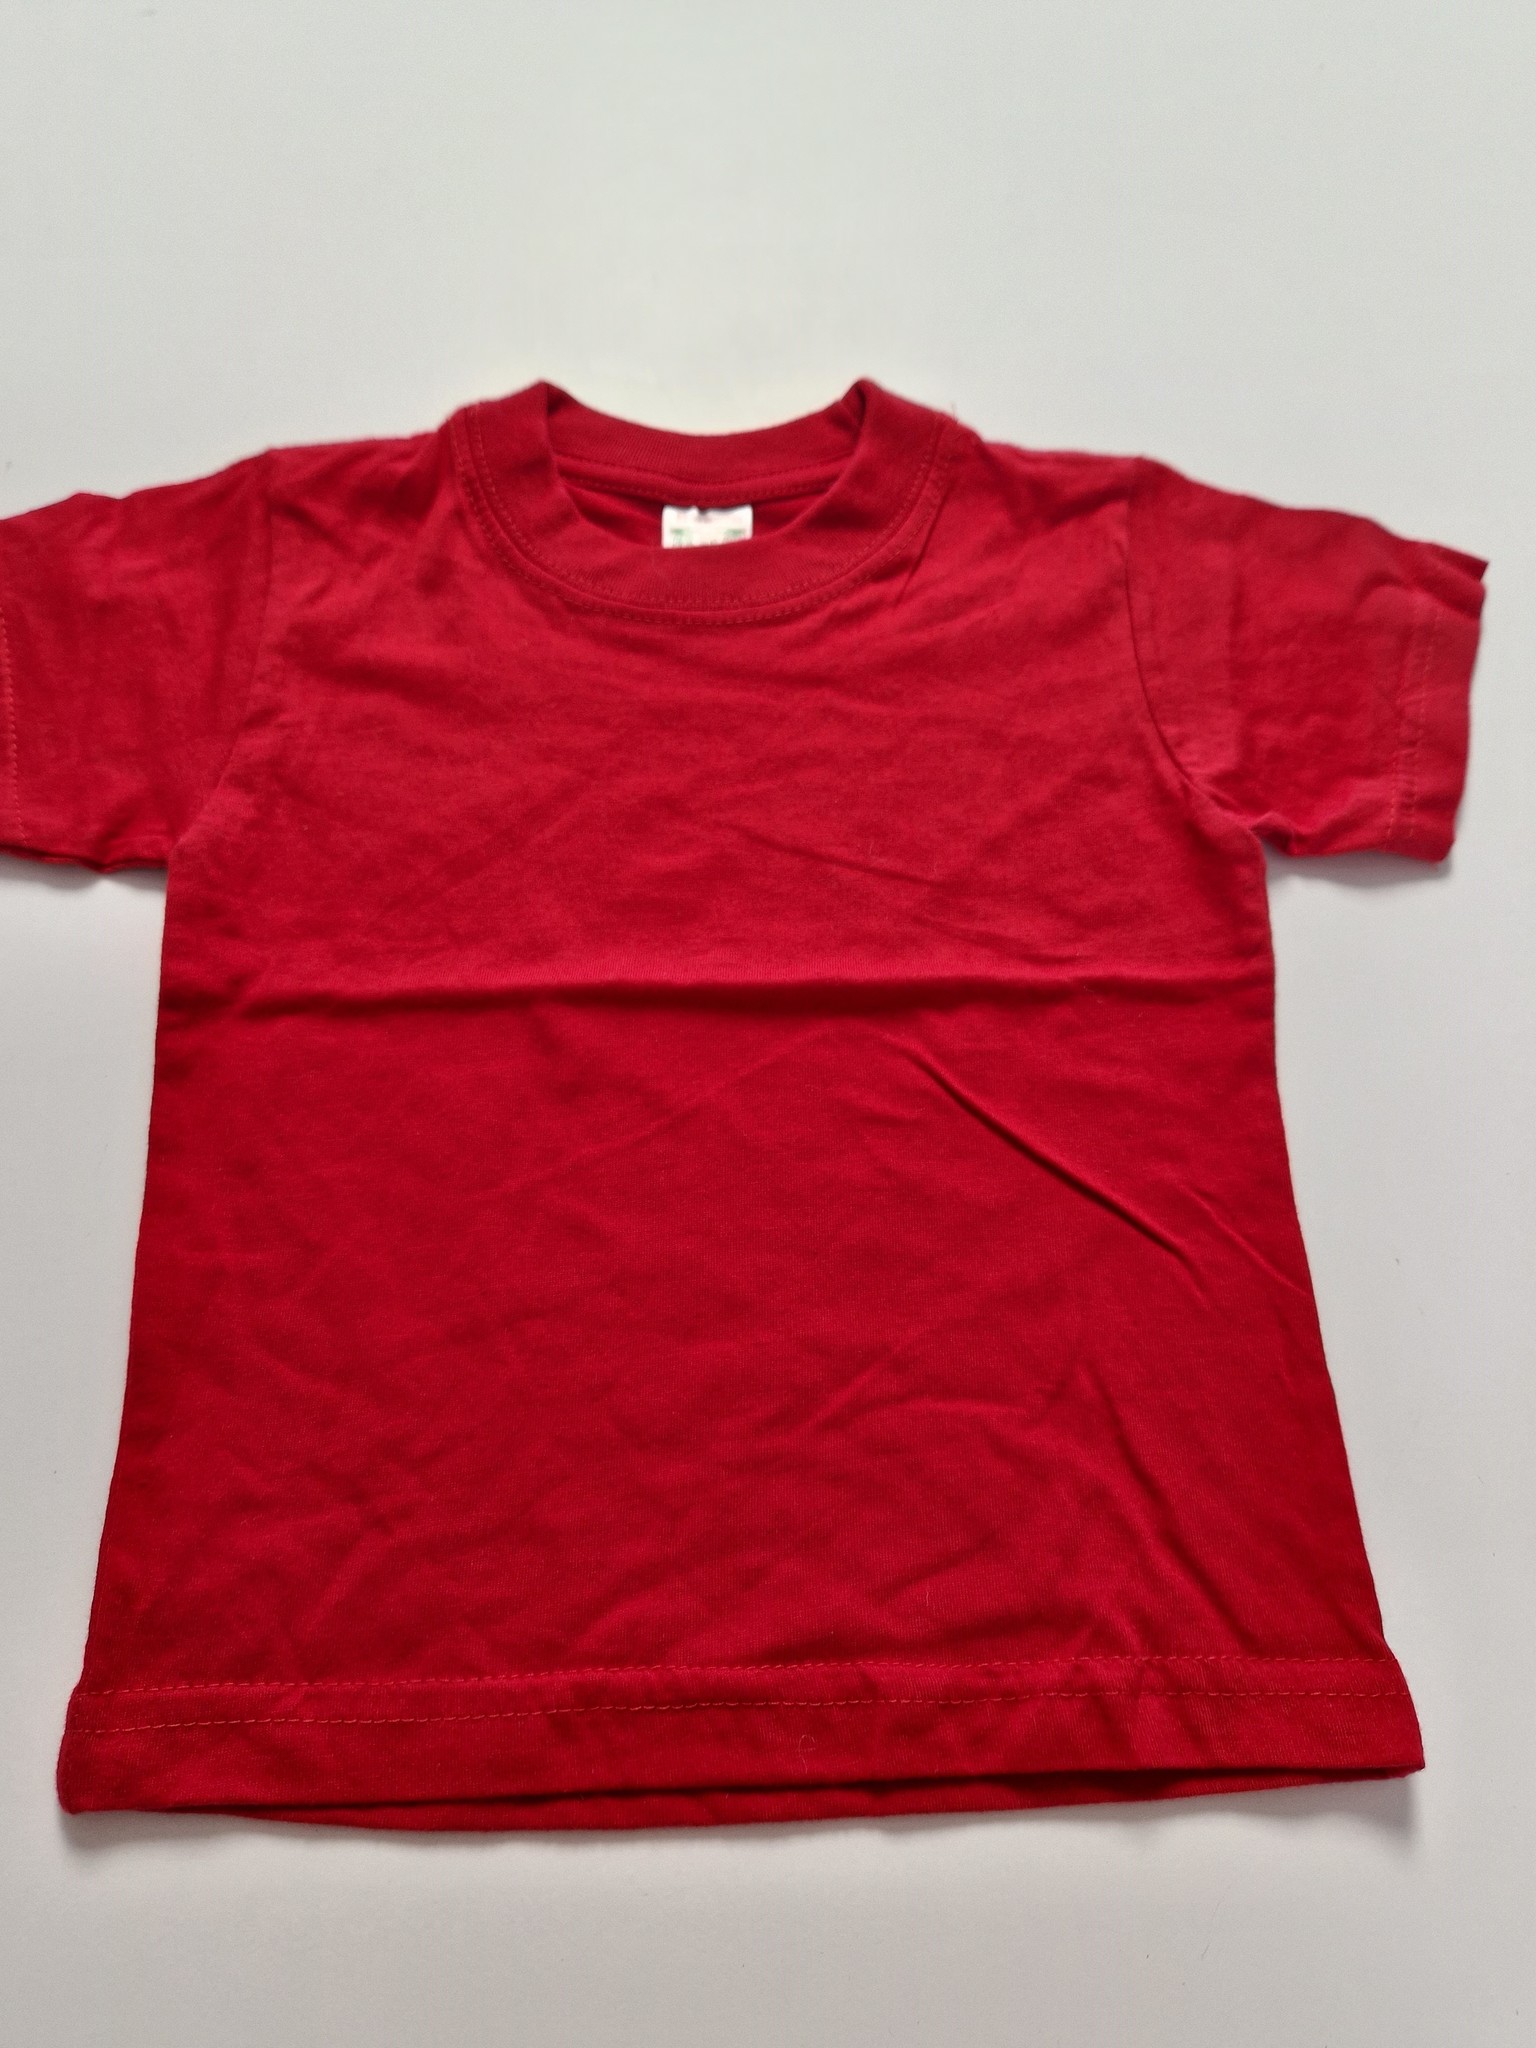 Glimp Hubert Hudson Generaliseren Baby T-shirt Rood 92 - Silhouetteshop